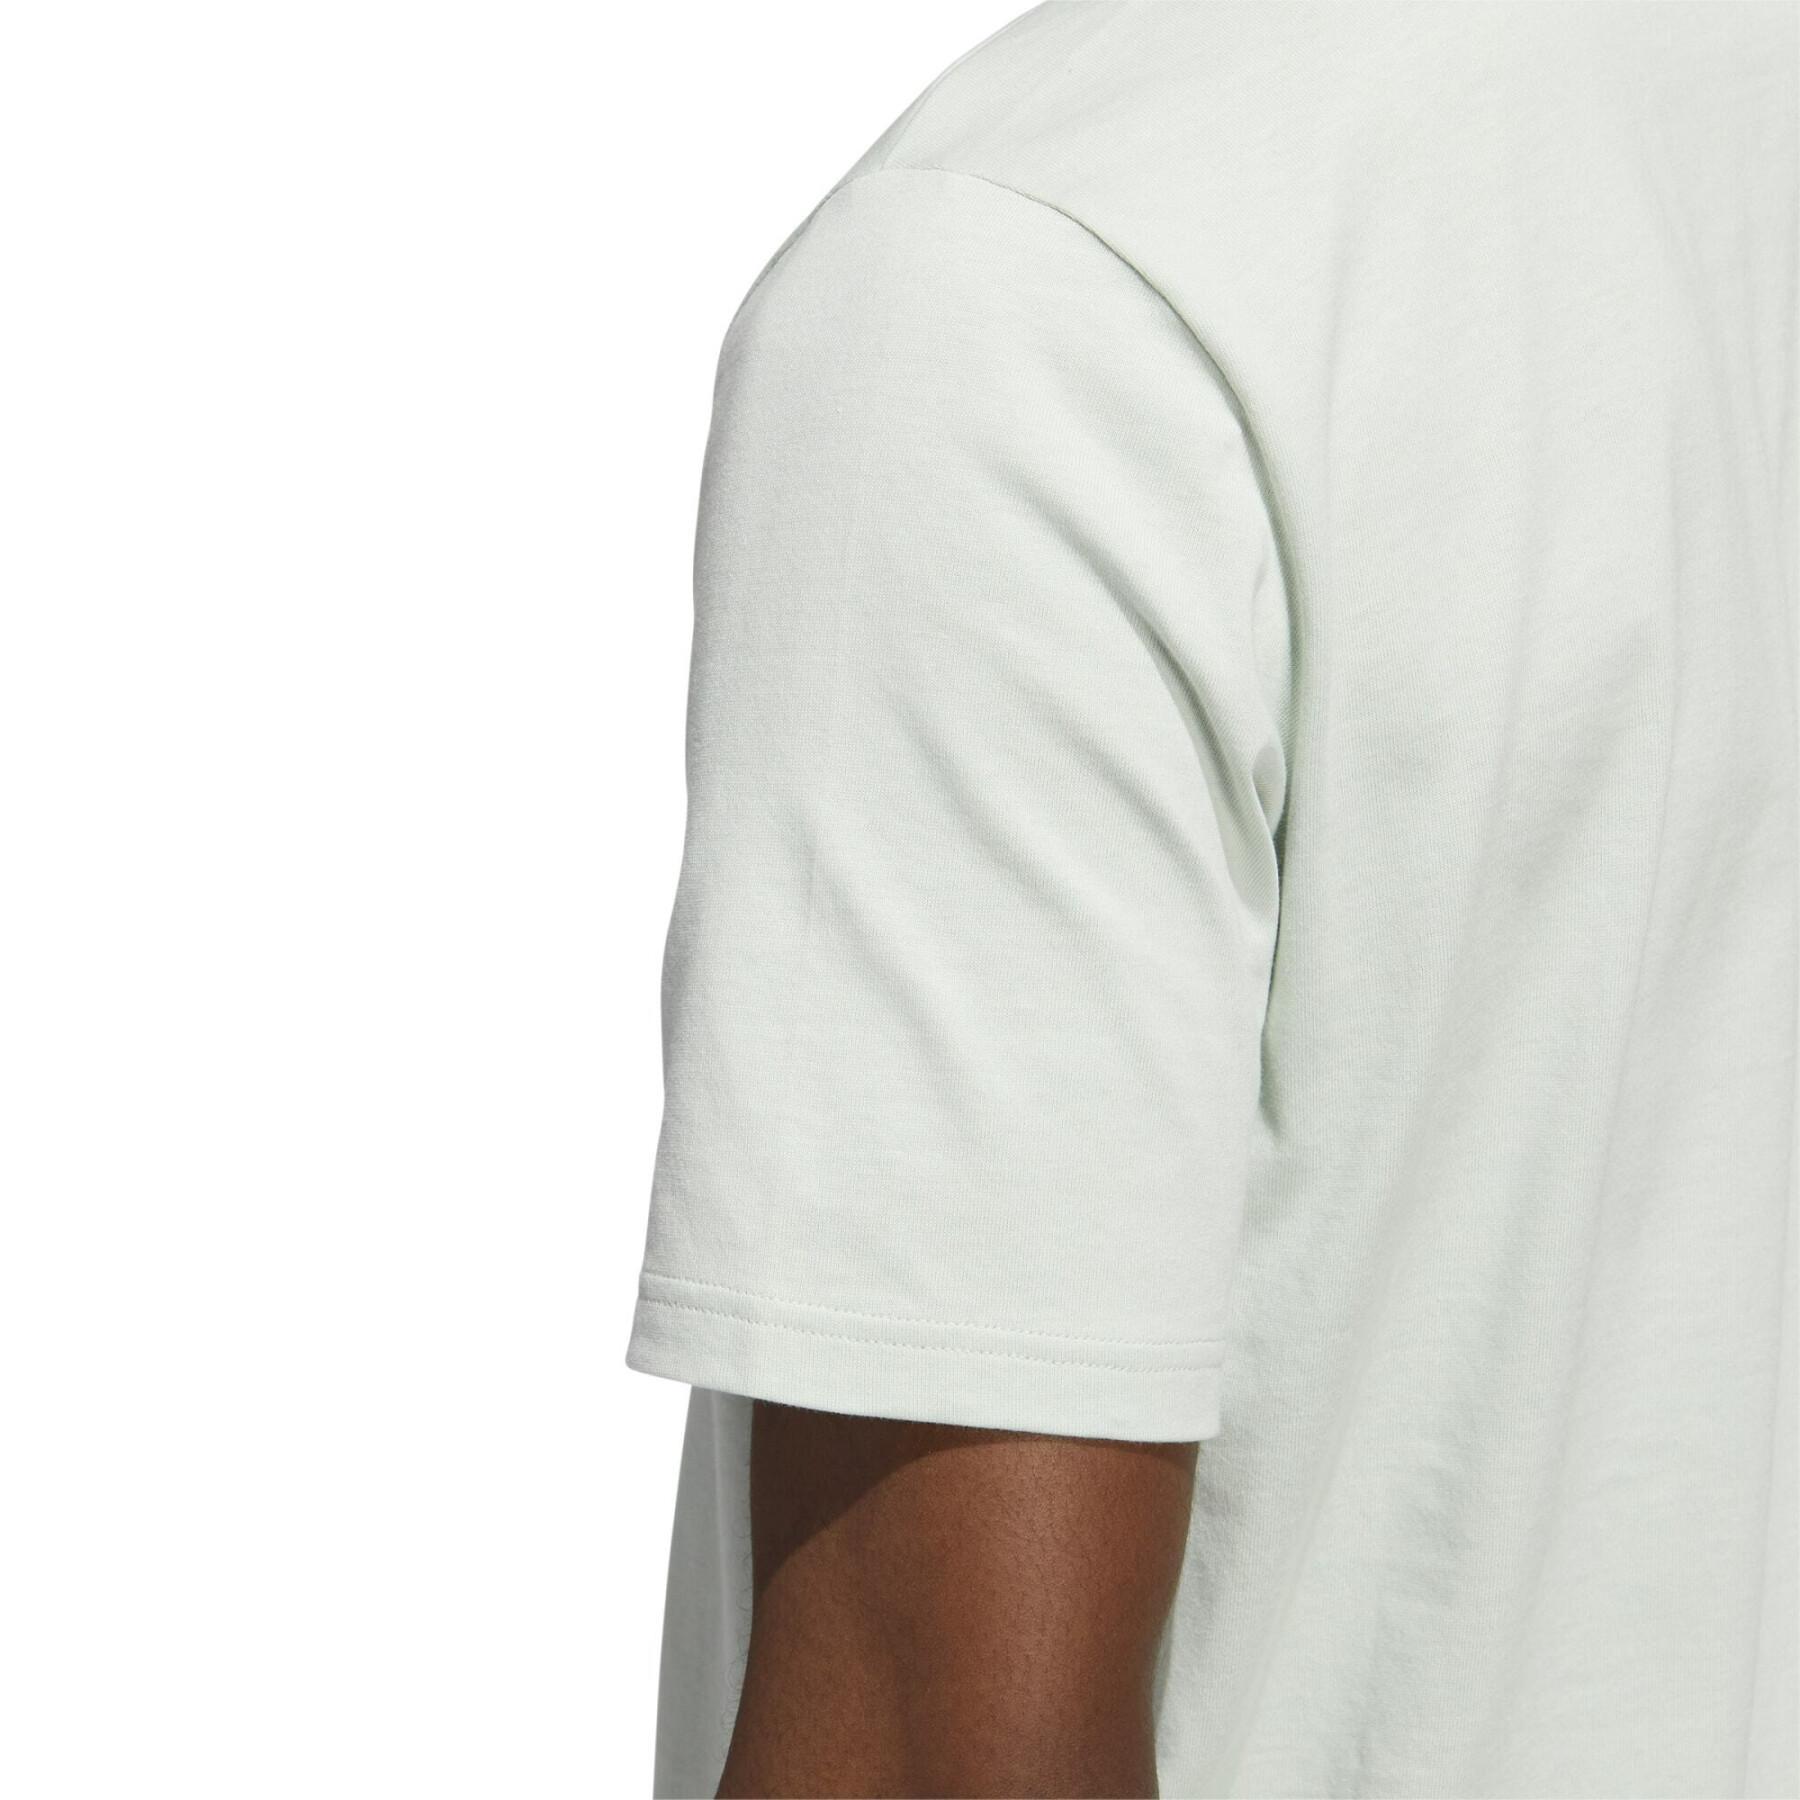 Grafisch T-shirt adidas Dynamic